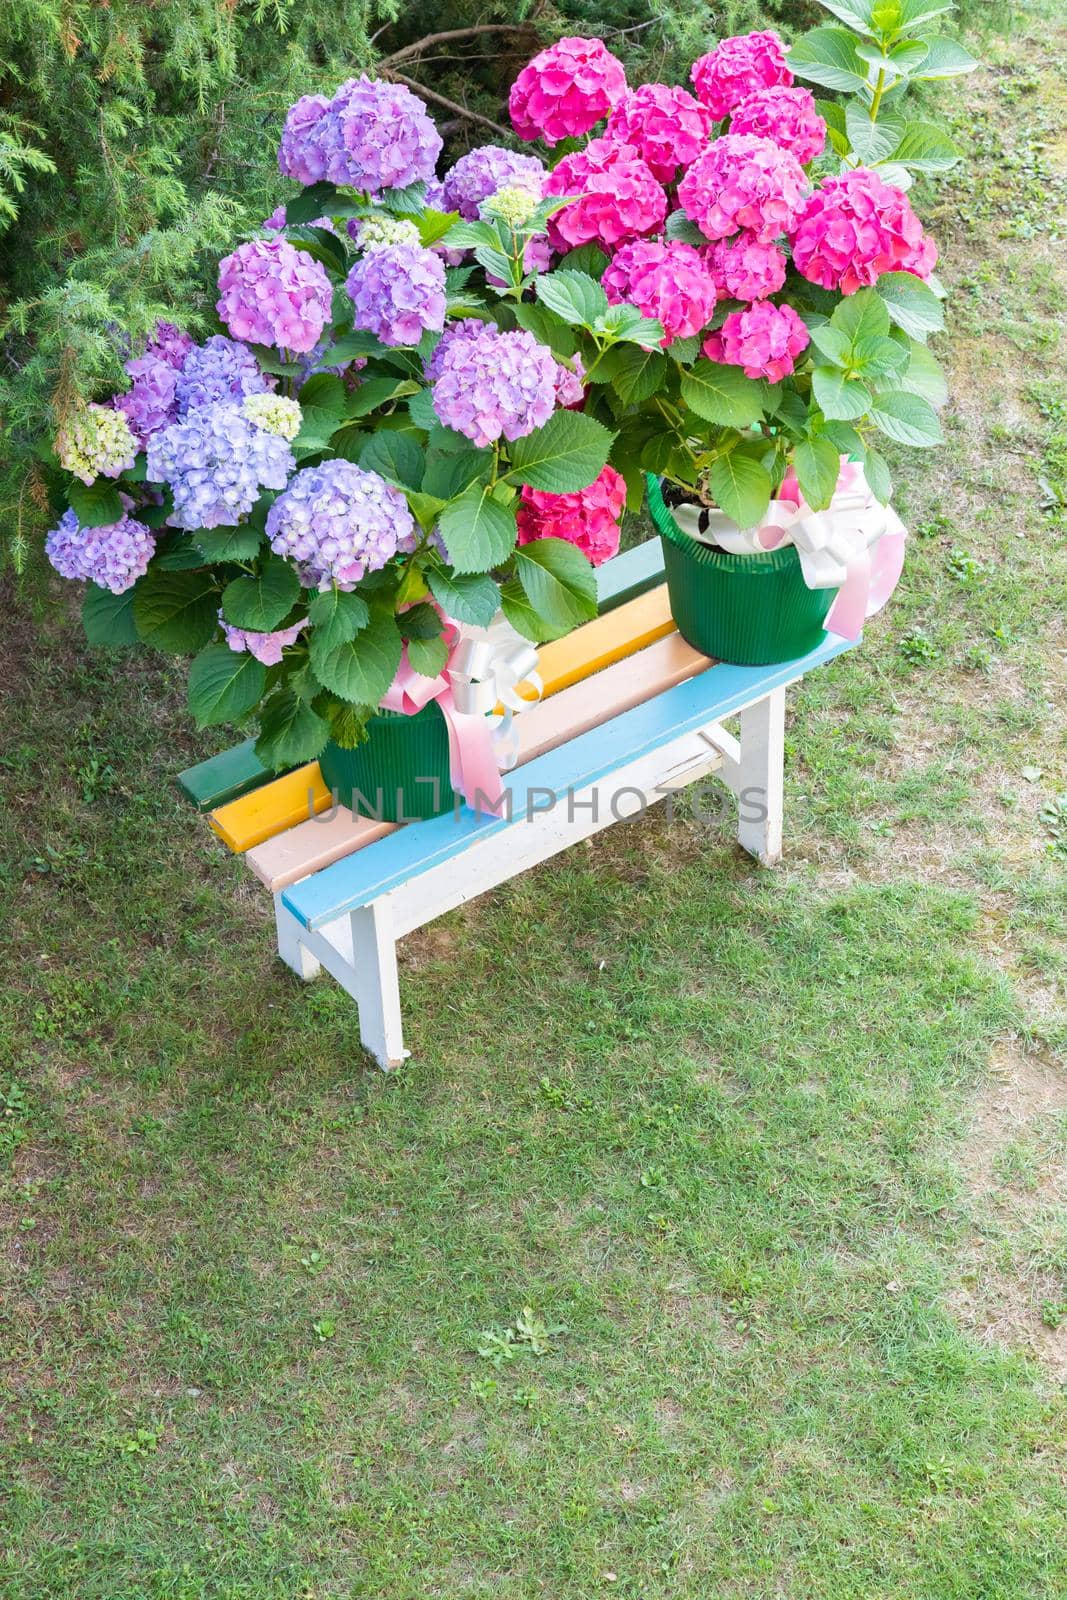 Ortensia flowers - Hydrangea - decoration garden. Romantic and delicate gift.